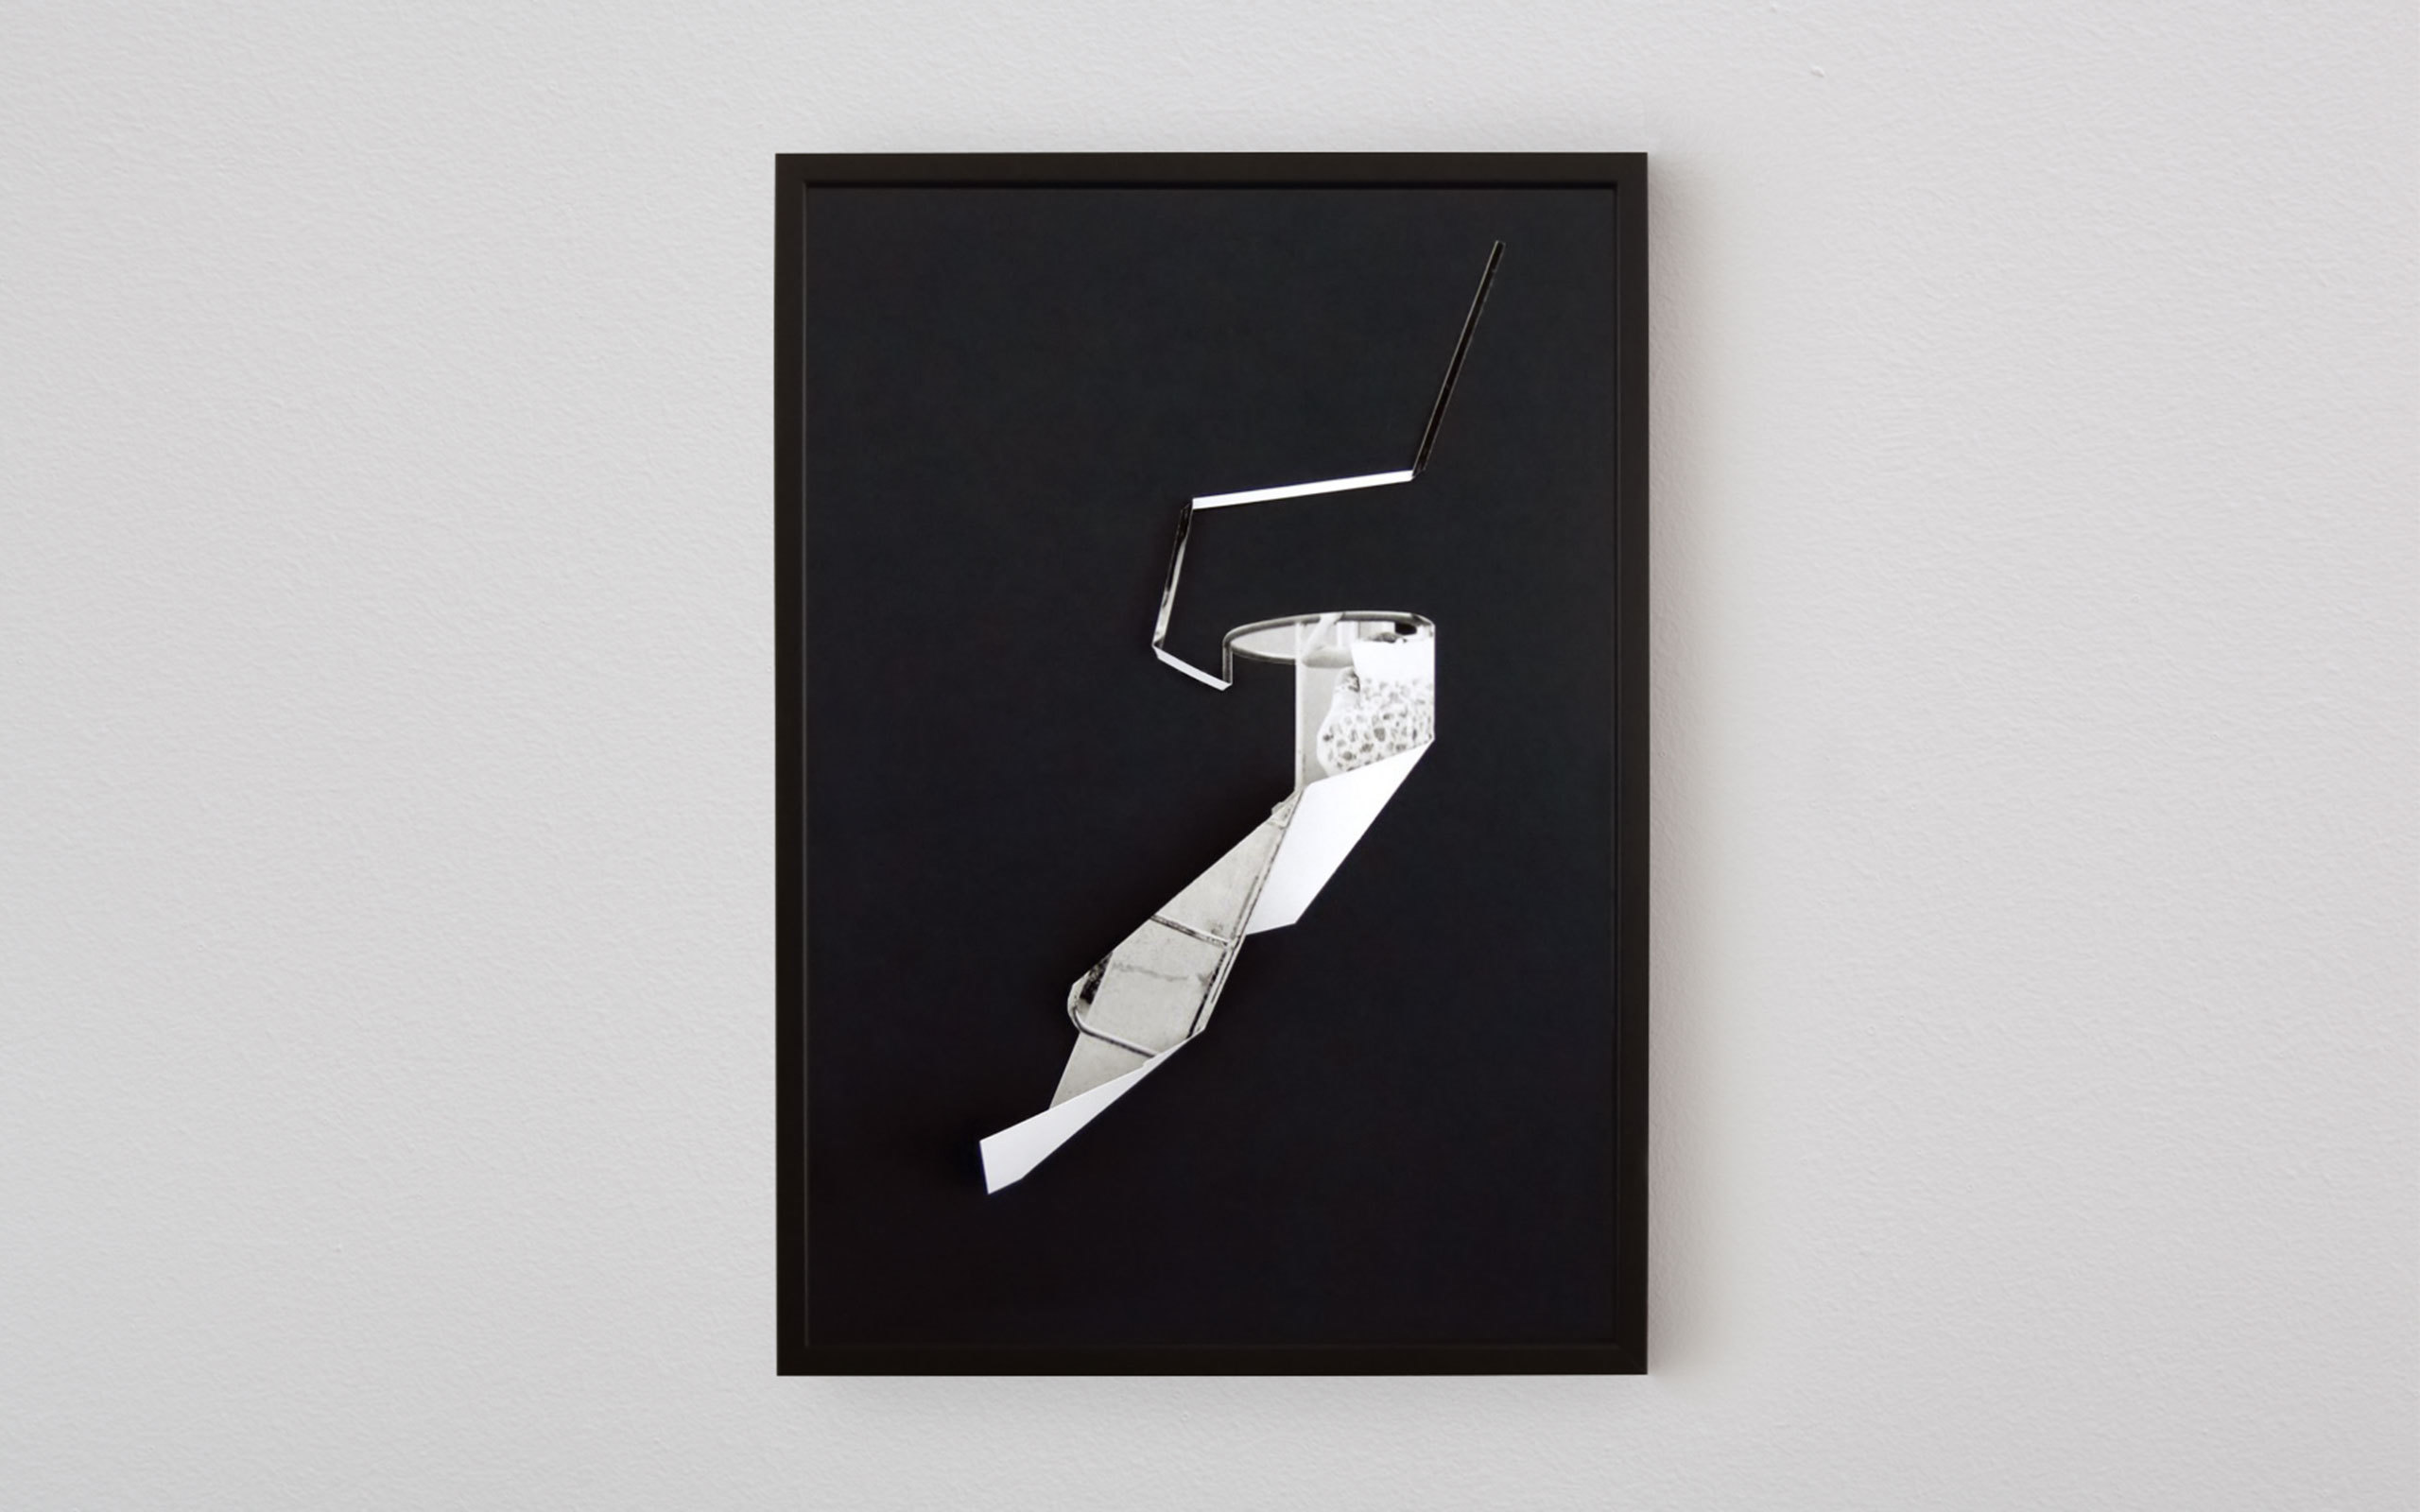 01 Spielplastik (Play Sculpture), folded inkjet print on Photo Rag paper, limited-release art edition by Danish artist Sofie Thorsen